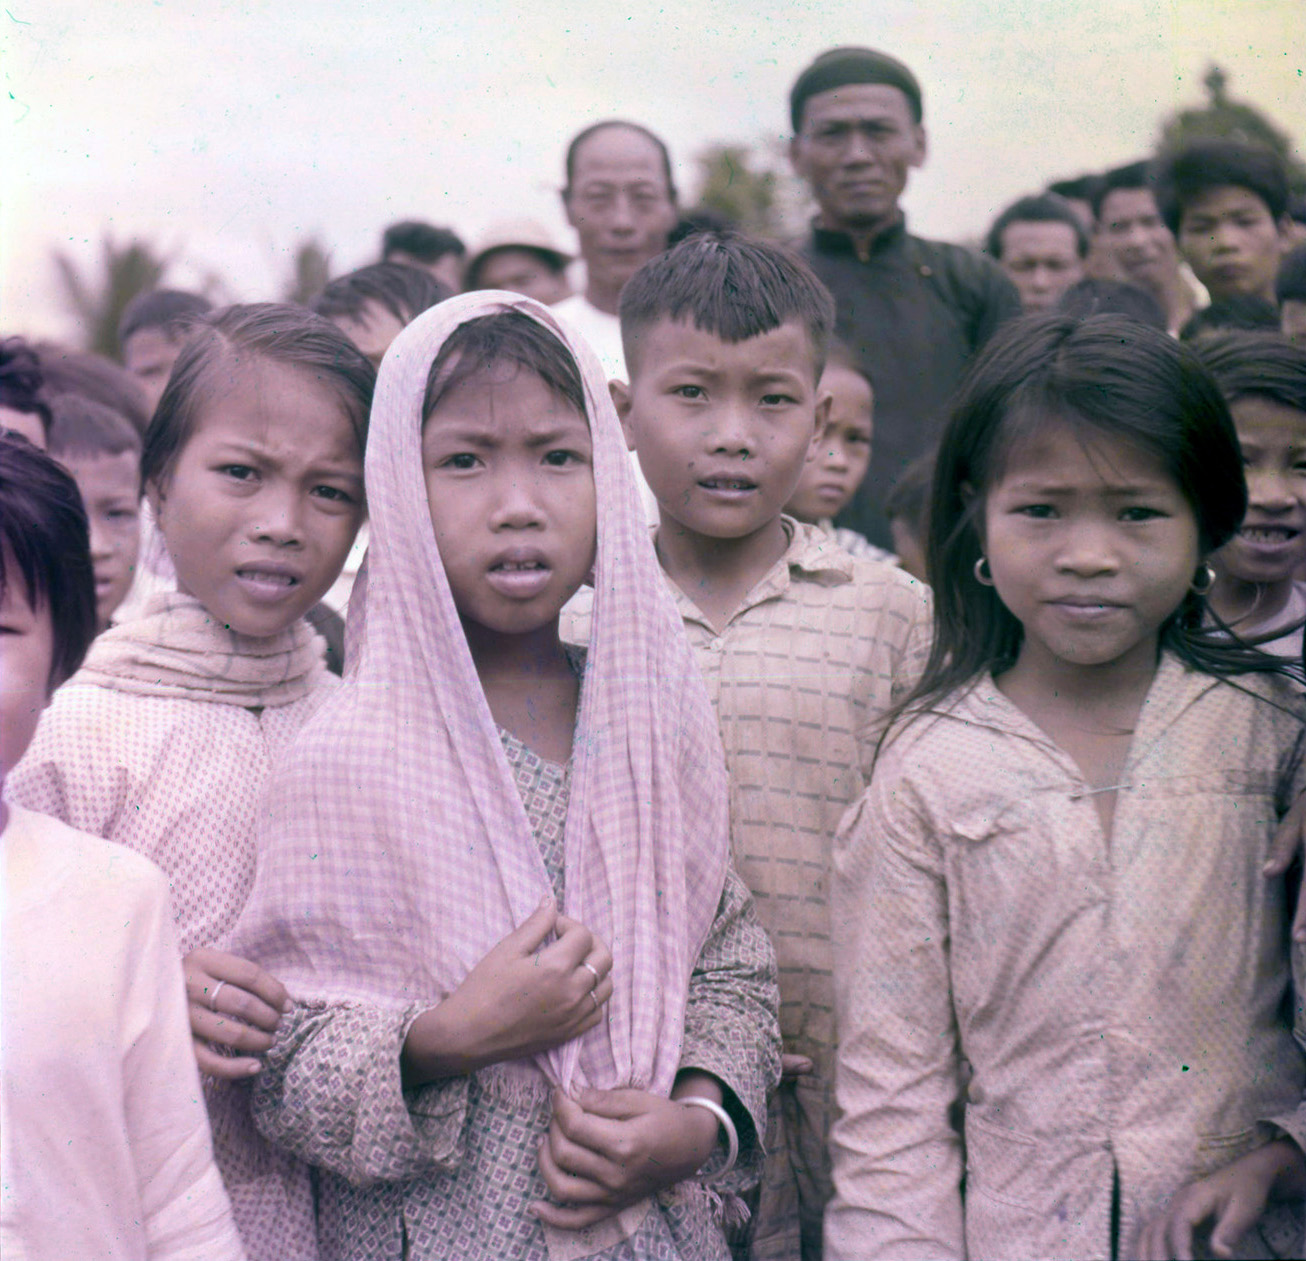 Vietnamese children, approximately 1962-1963